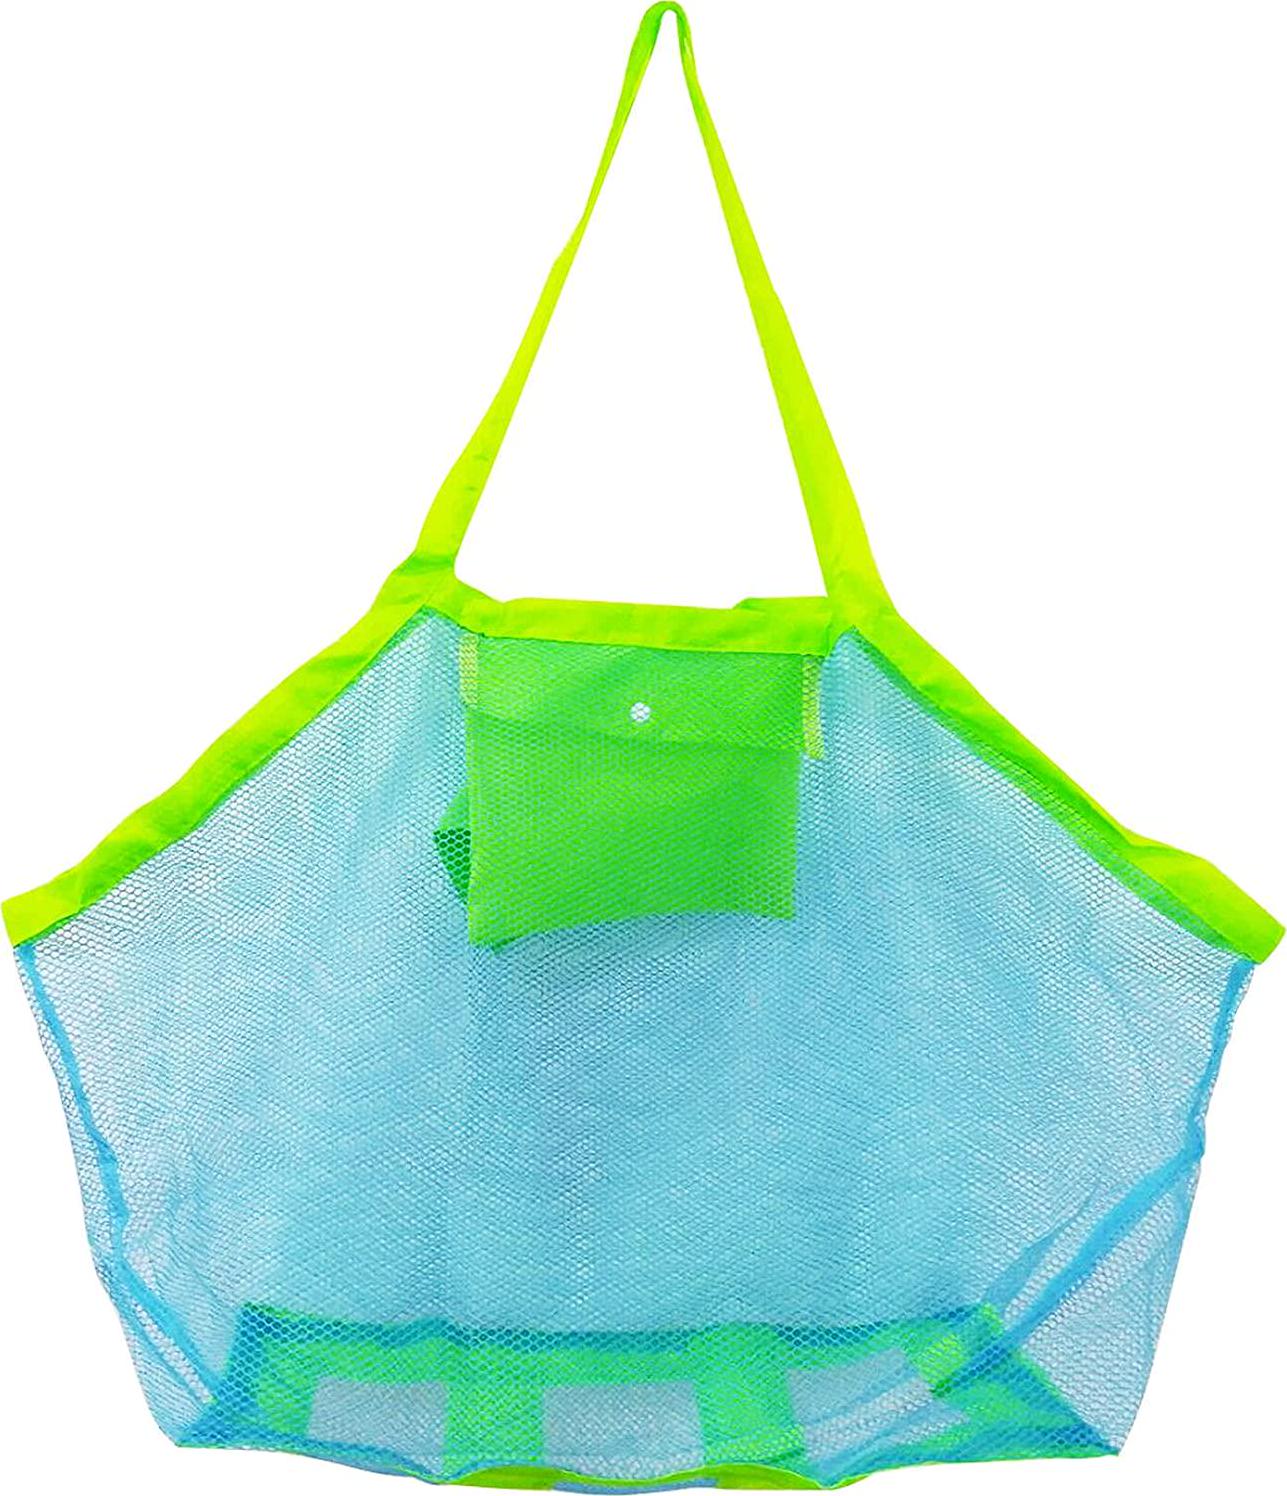 Bornfeel, Large Mesh Bag for Beach Toys Beach Bag for Sand Toys Mesh Sand Toy Bag Tote Green / Blue 18 x 12 x 18 Inch